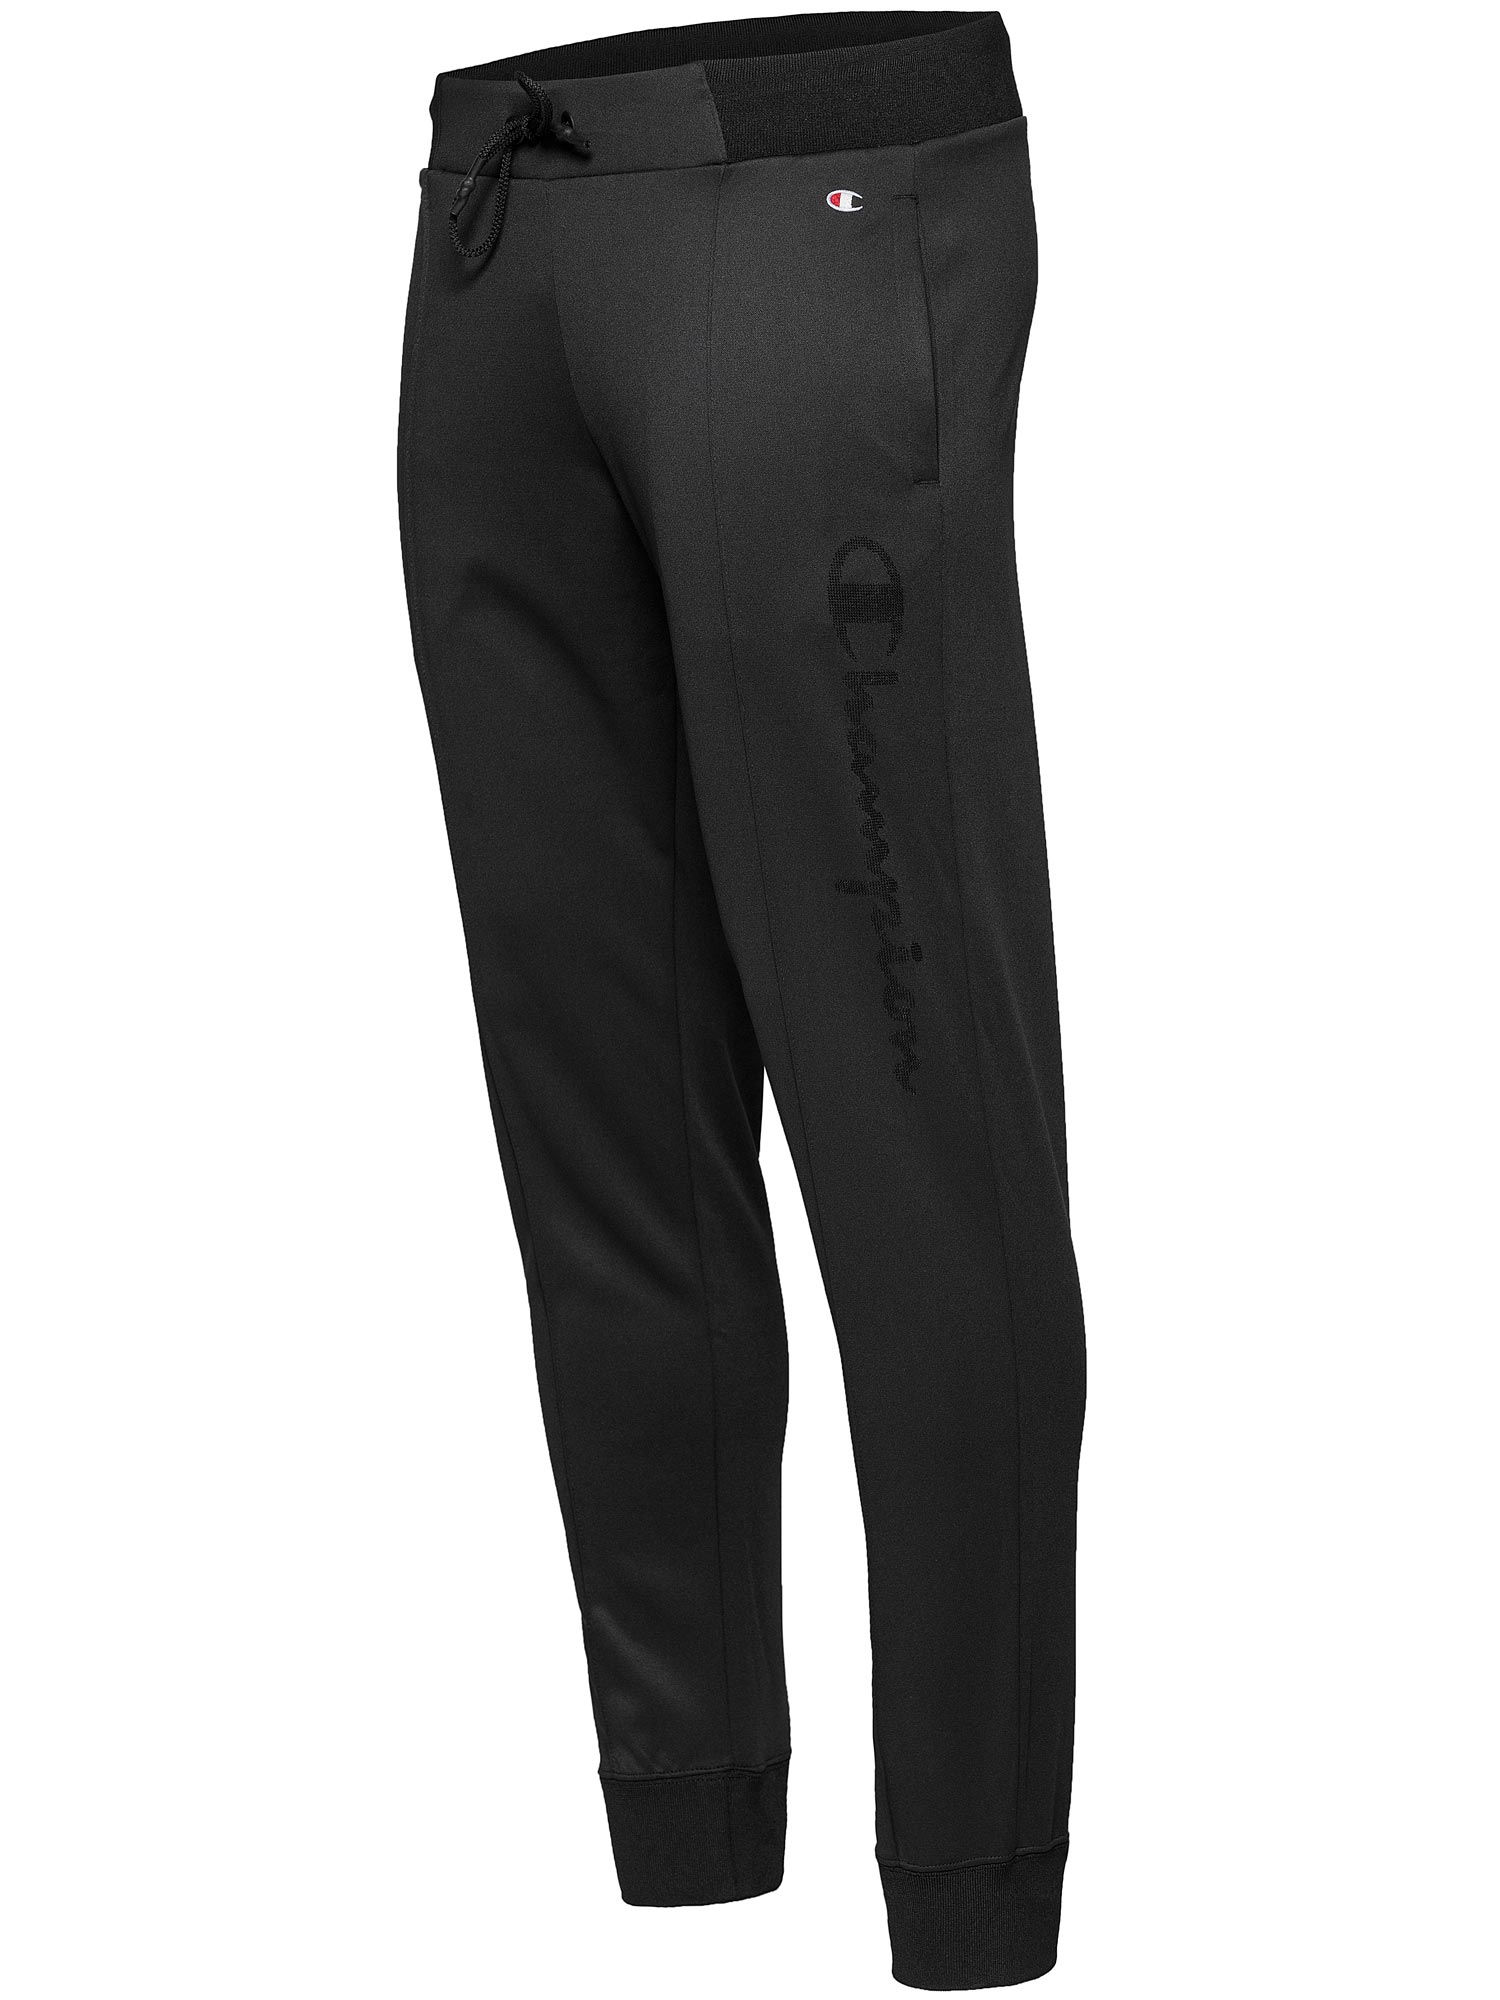 Champion Athletic Rib Cuff Pants Customfit (Black)